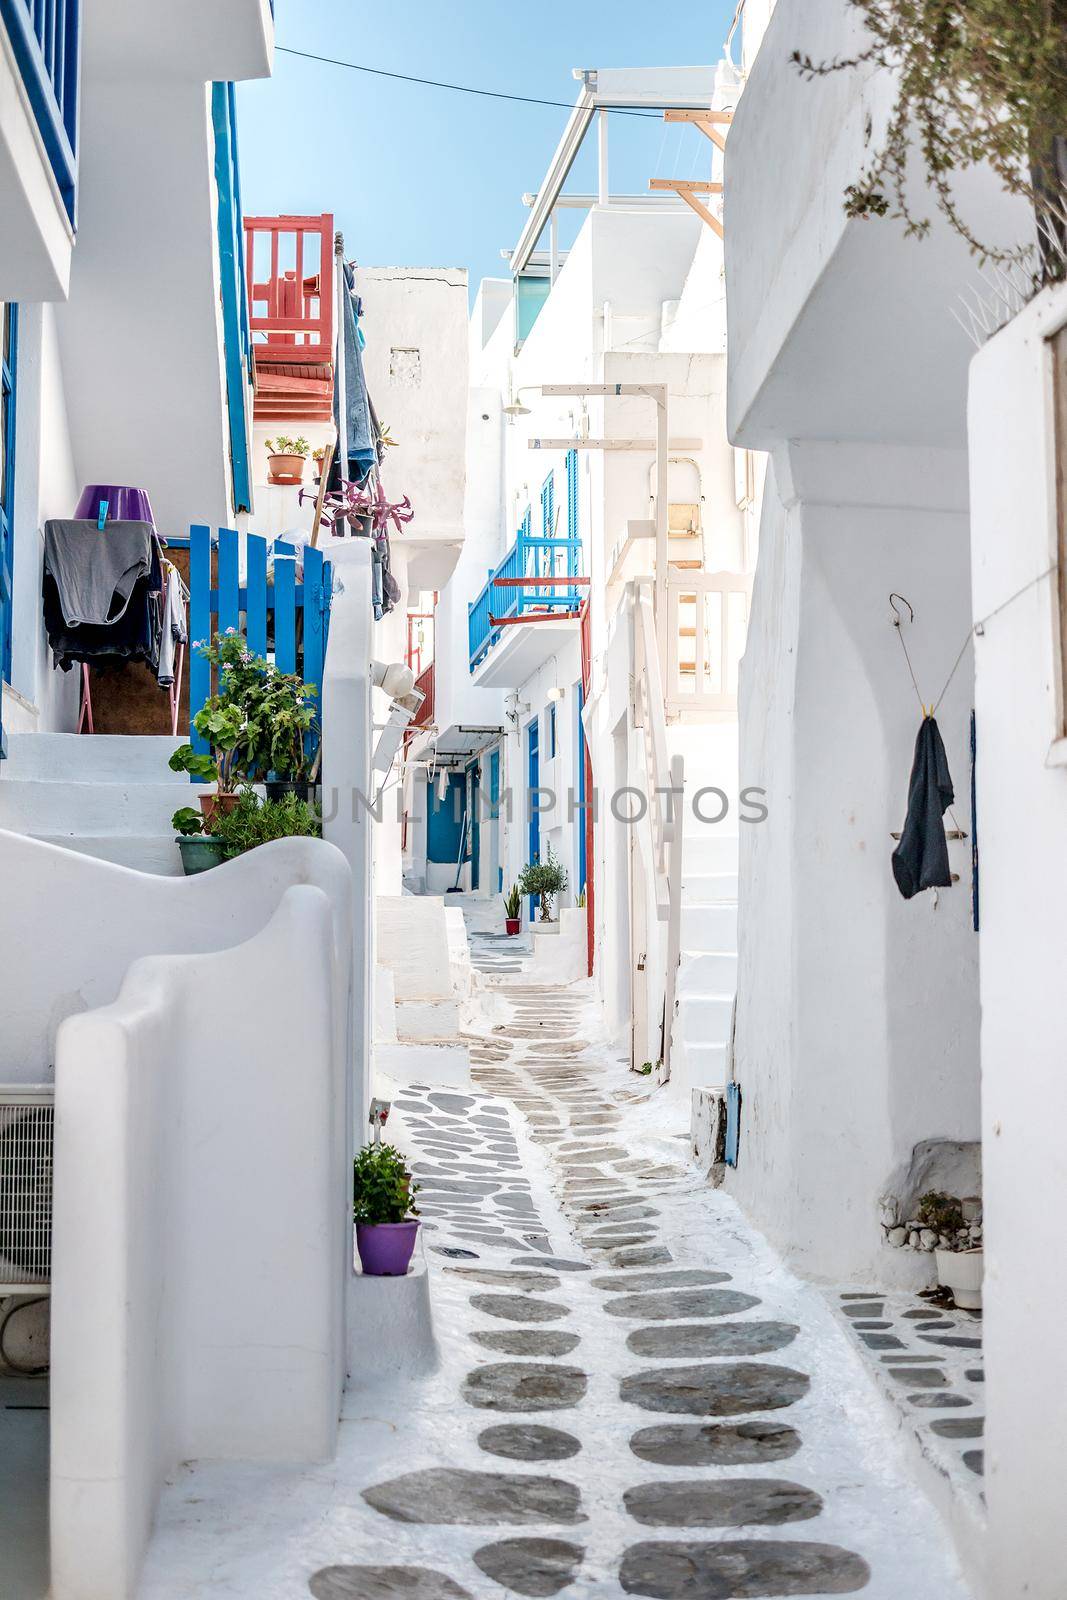 Narrow street with white houses, Greece by tan4ikk1